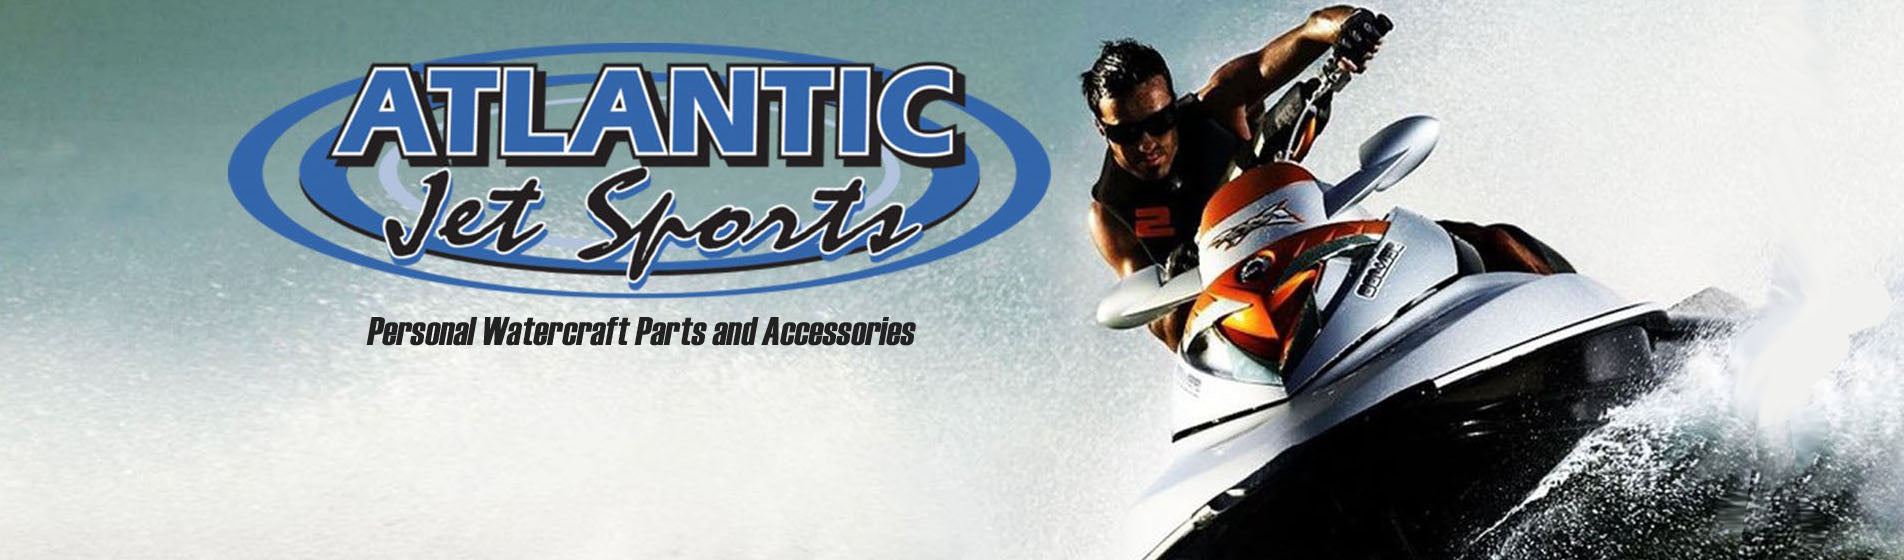 Atlantic Jet Sports - The Premier Personal Watercraft Jet Ski Store